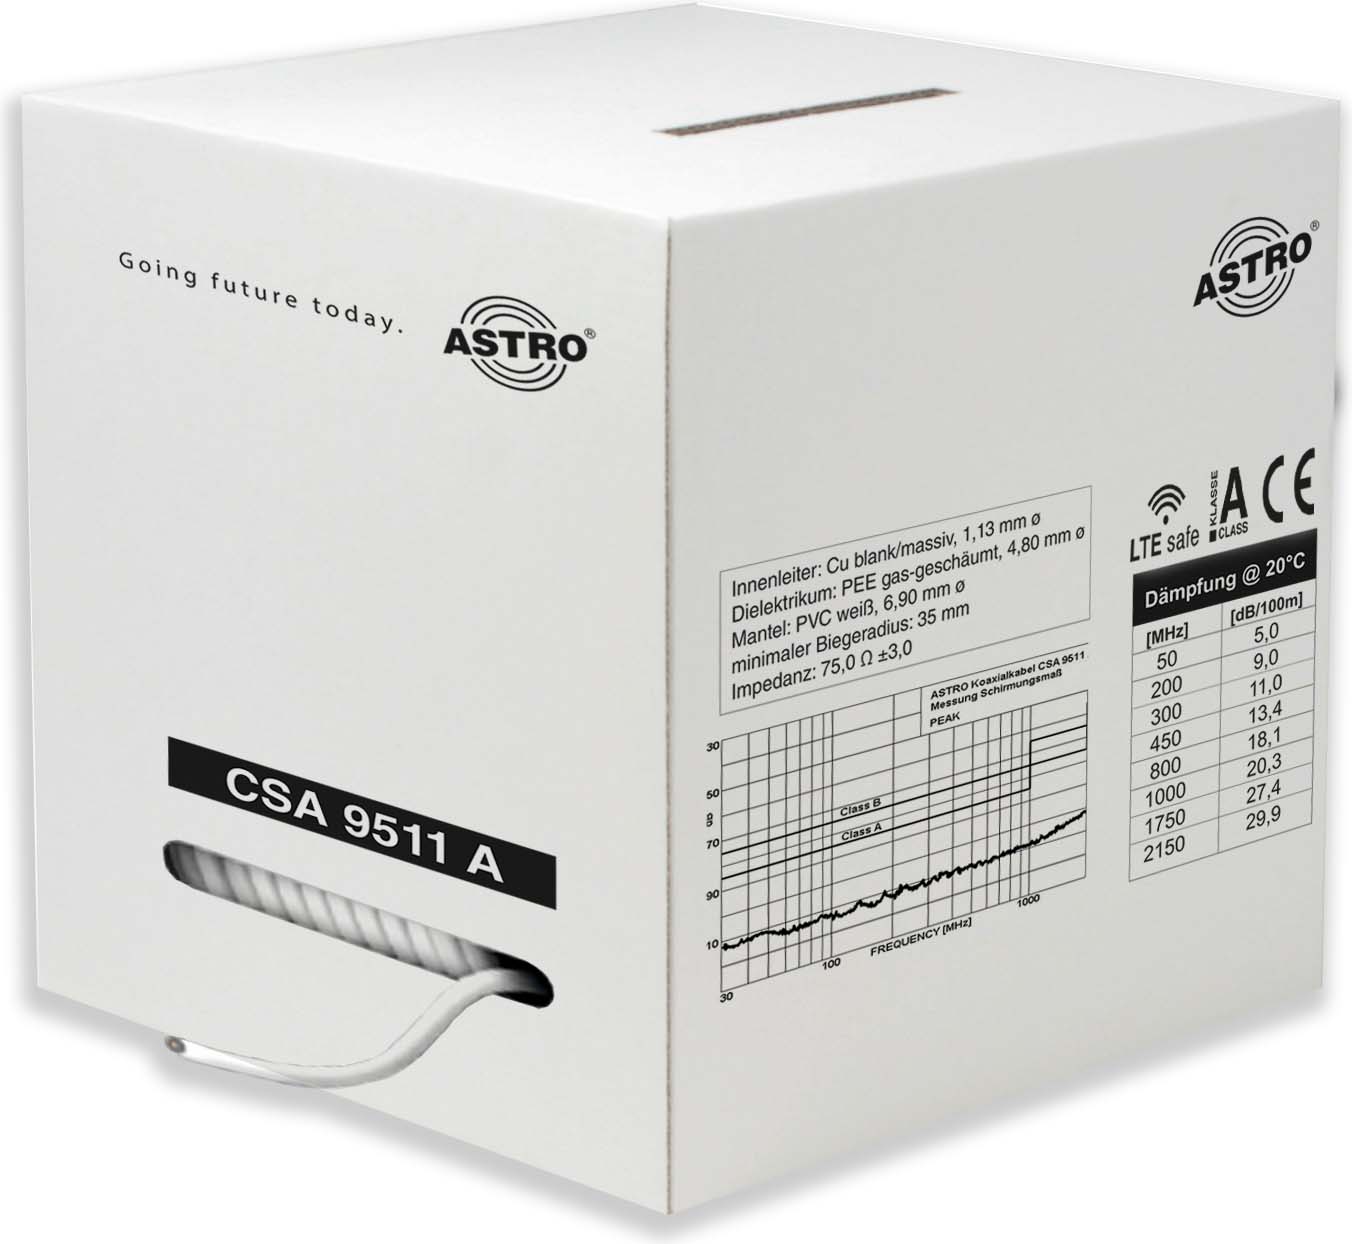 Astro 750955 CSA 9511A Box250 Eca Koax-Kabel